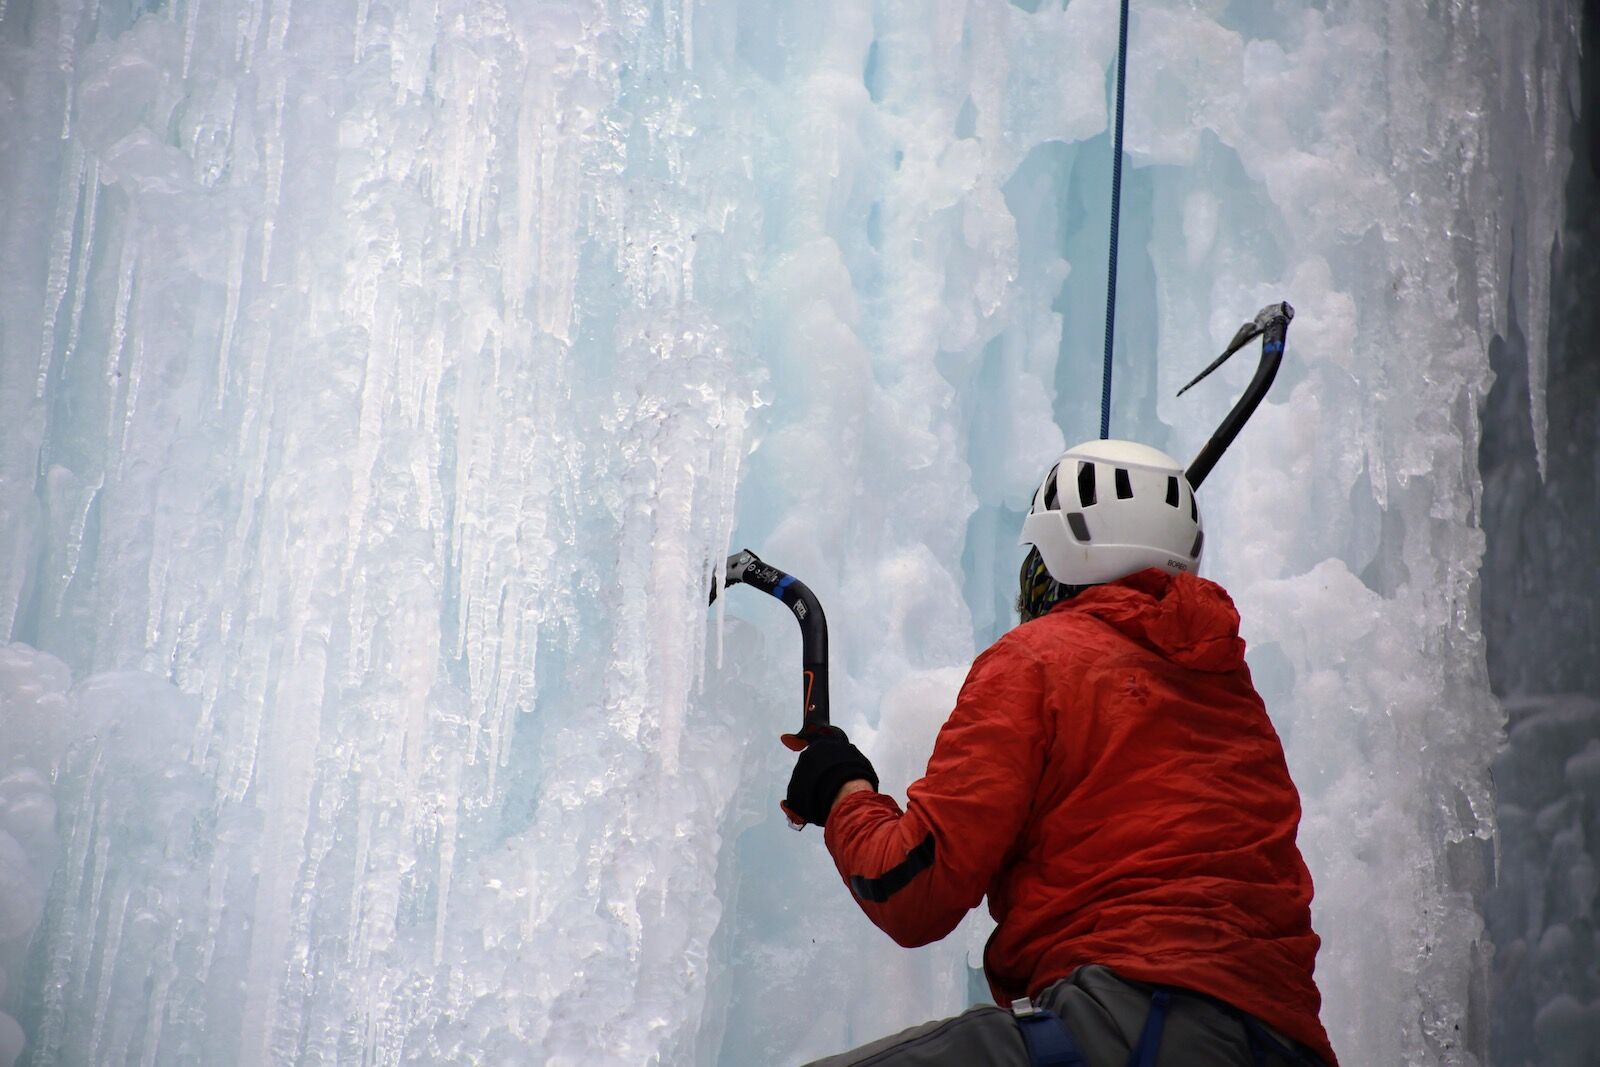 Ice climber with axes